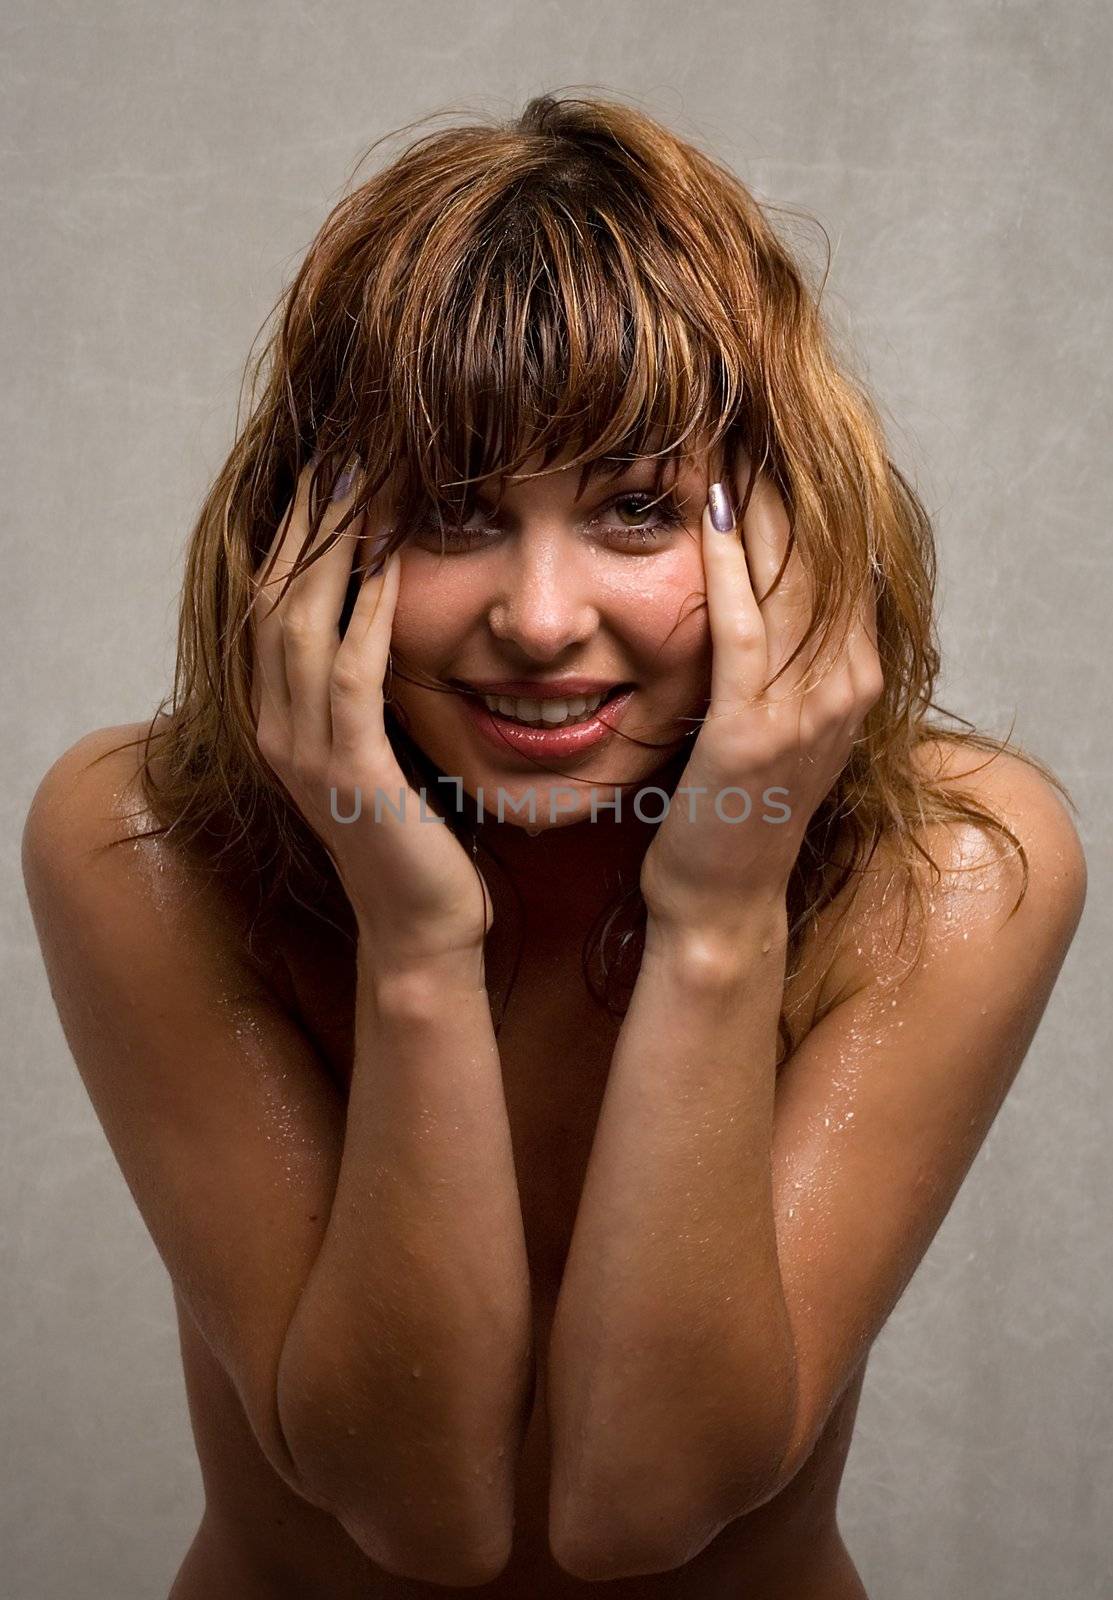 Wet laughing girl